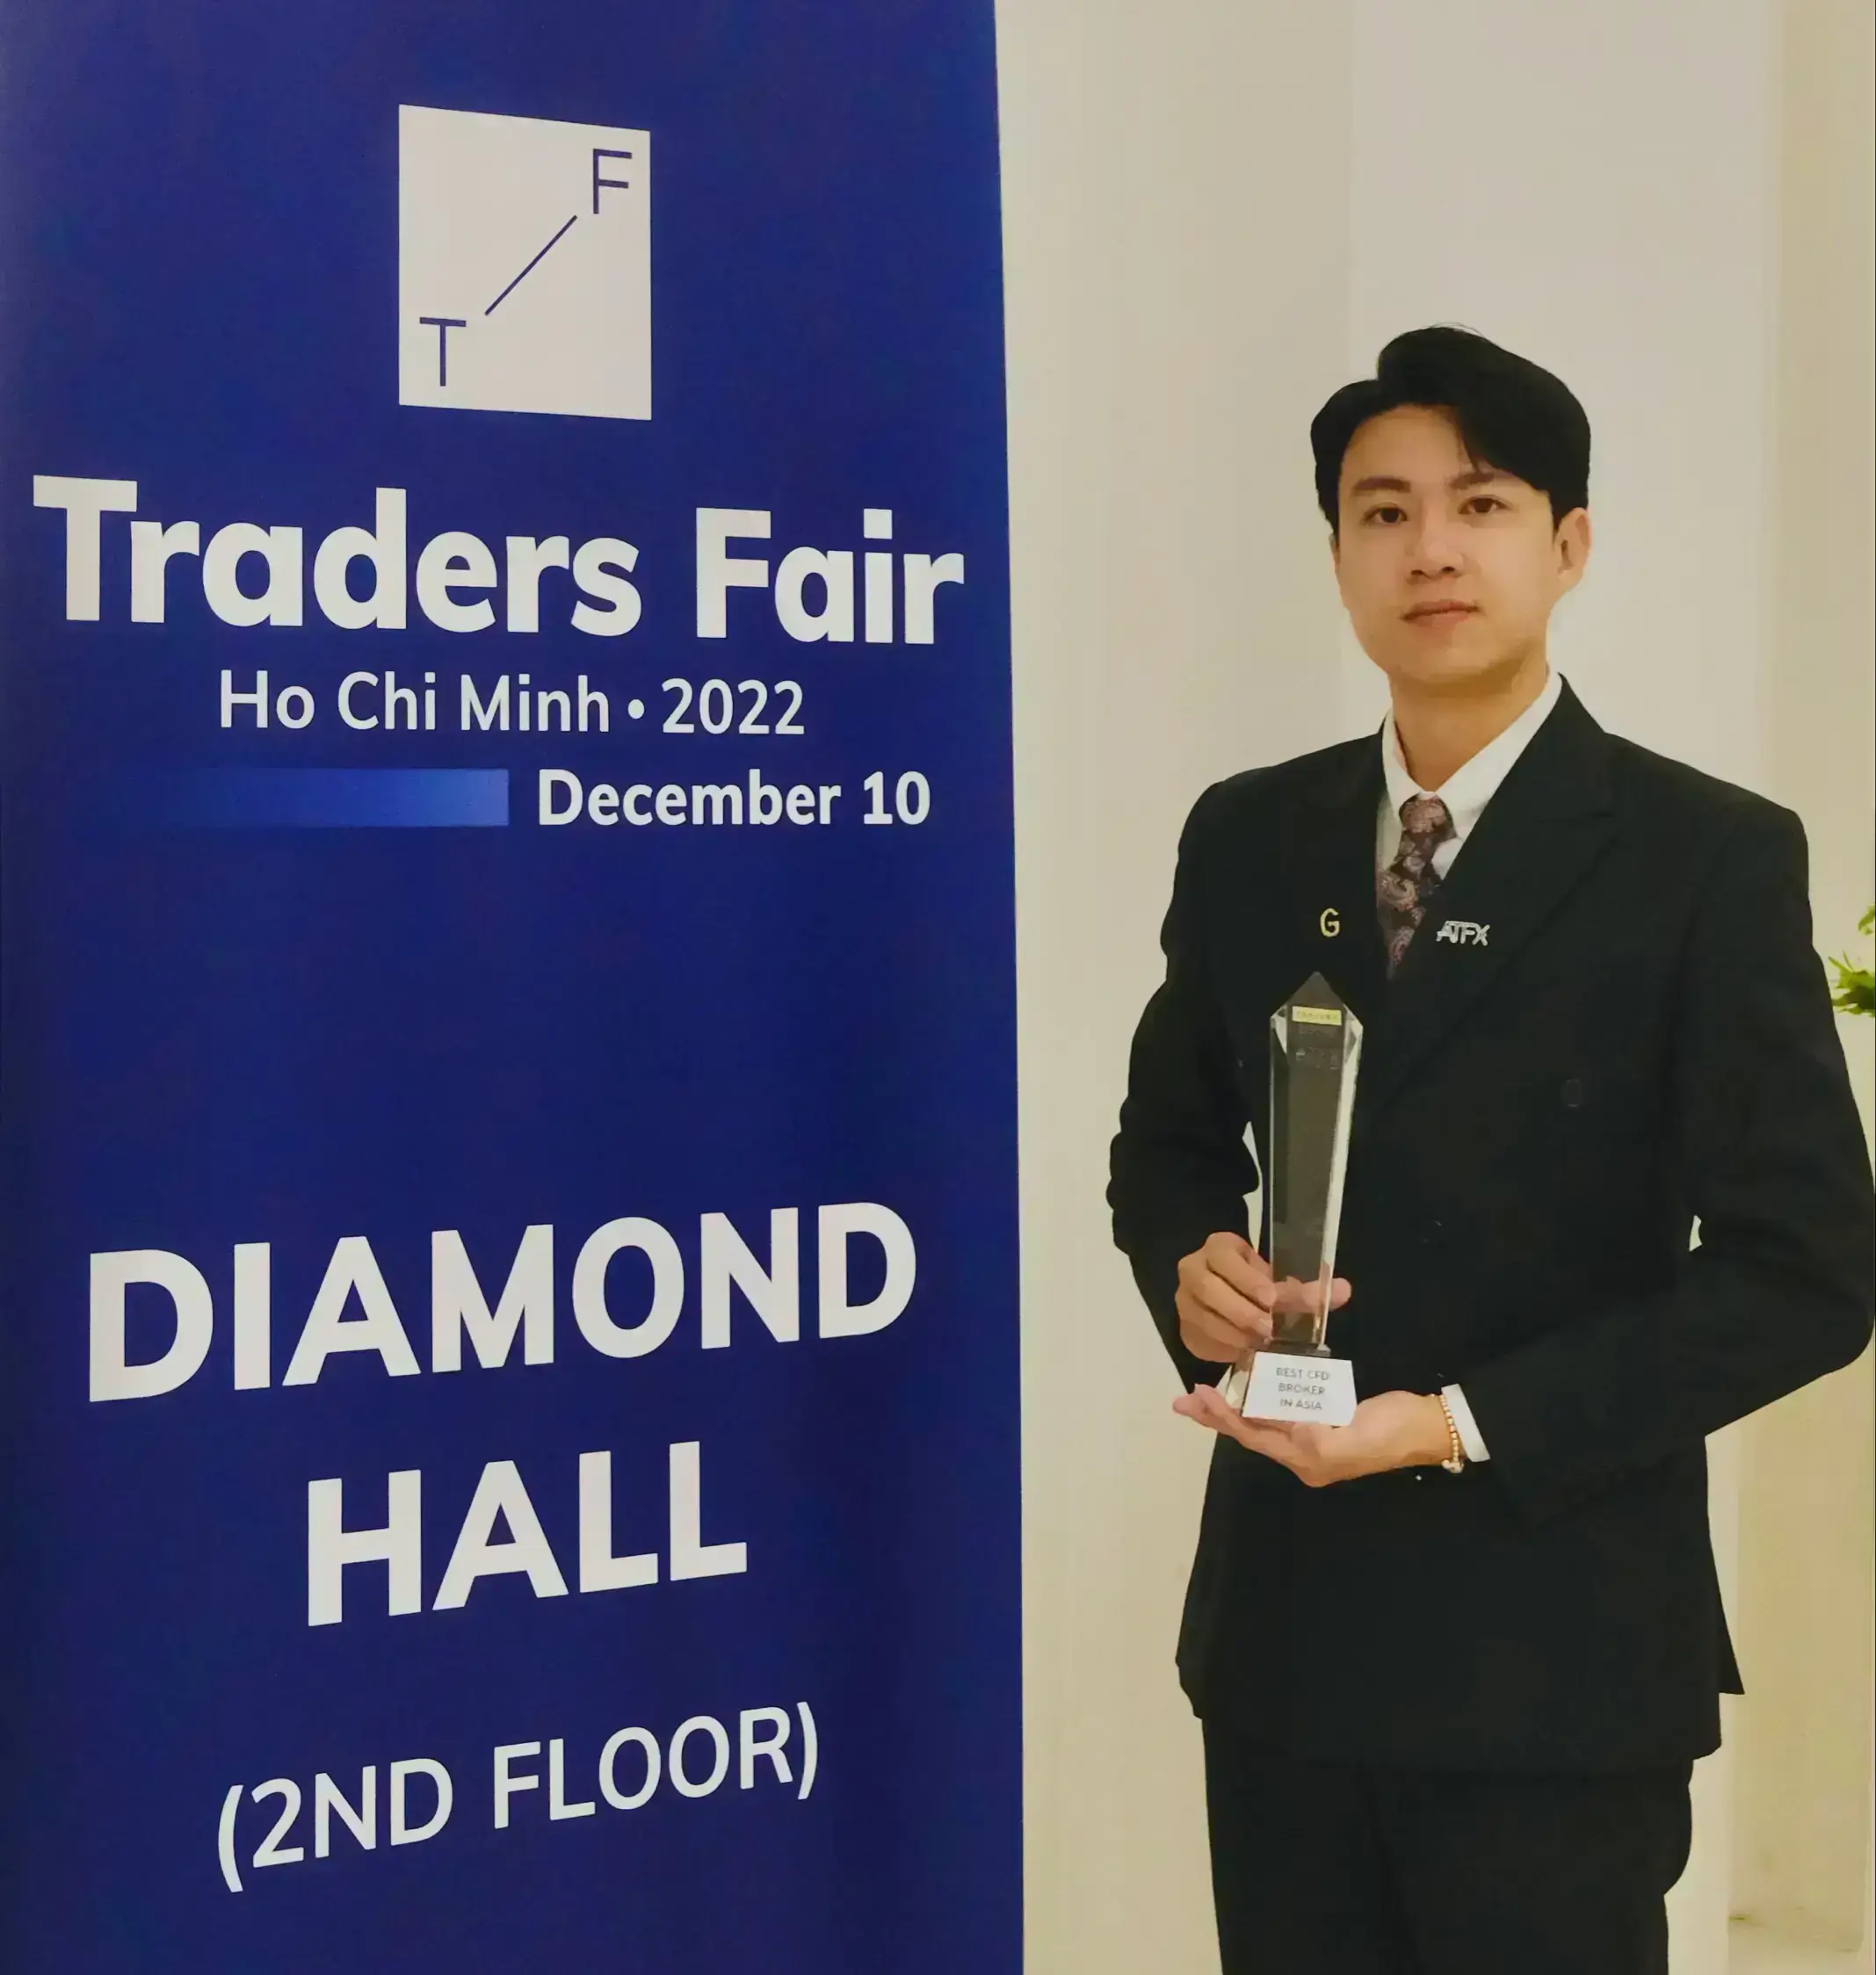 traders fair 2022 atfx vietnam